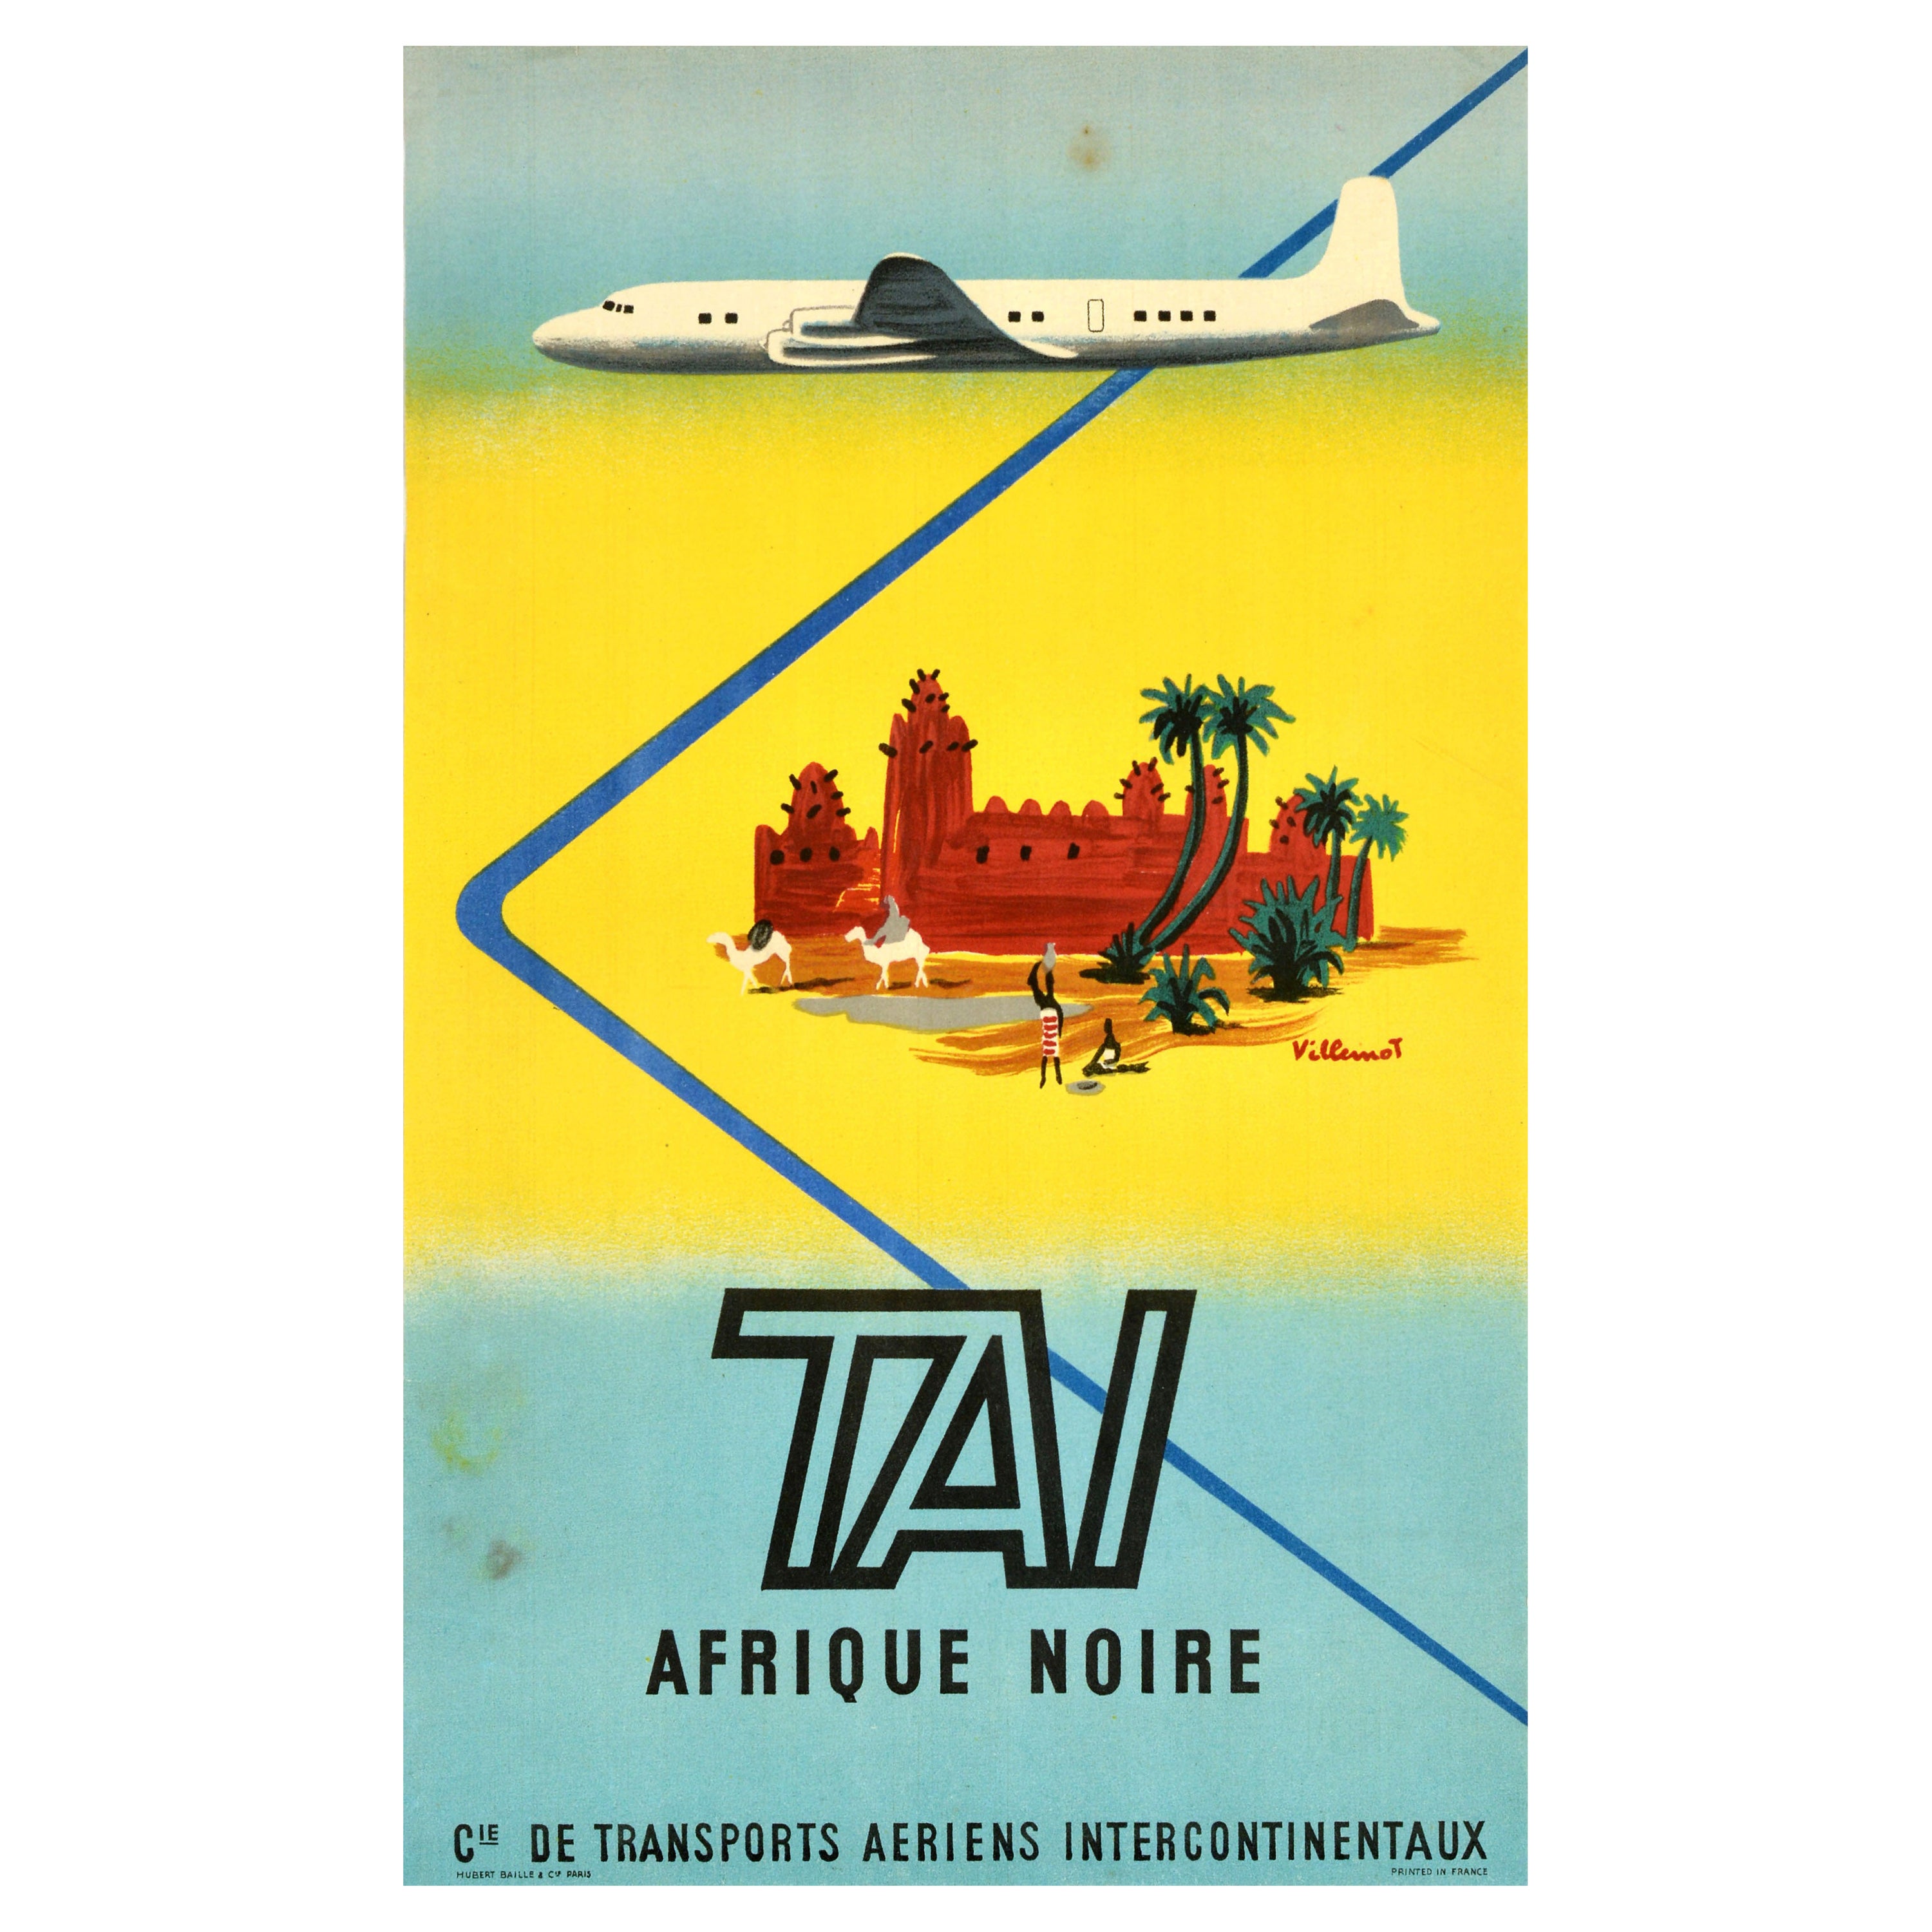 Original Vintage Travel Poster TAI Afrique Noire Sub Sahara Africa Villemot Art